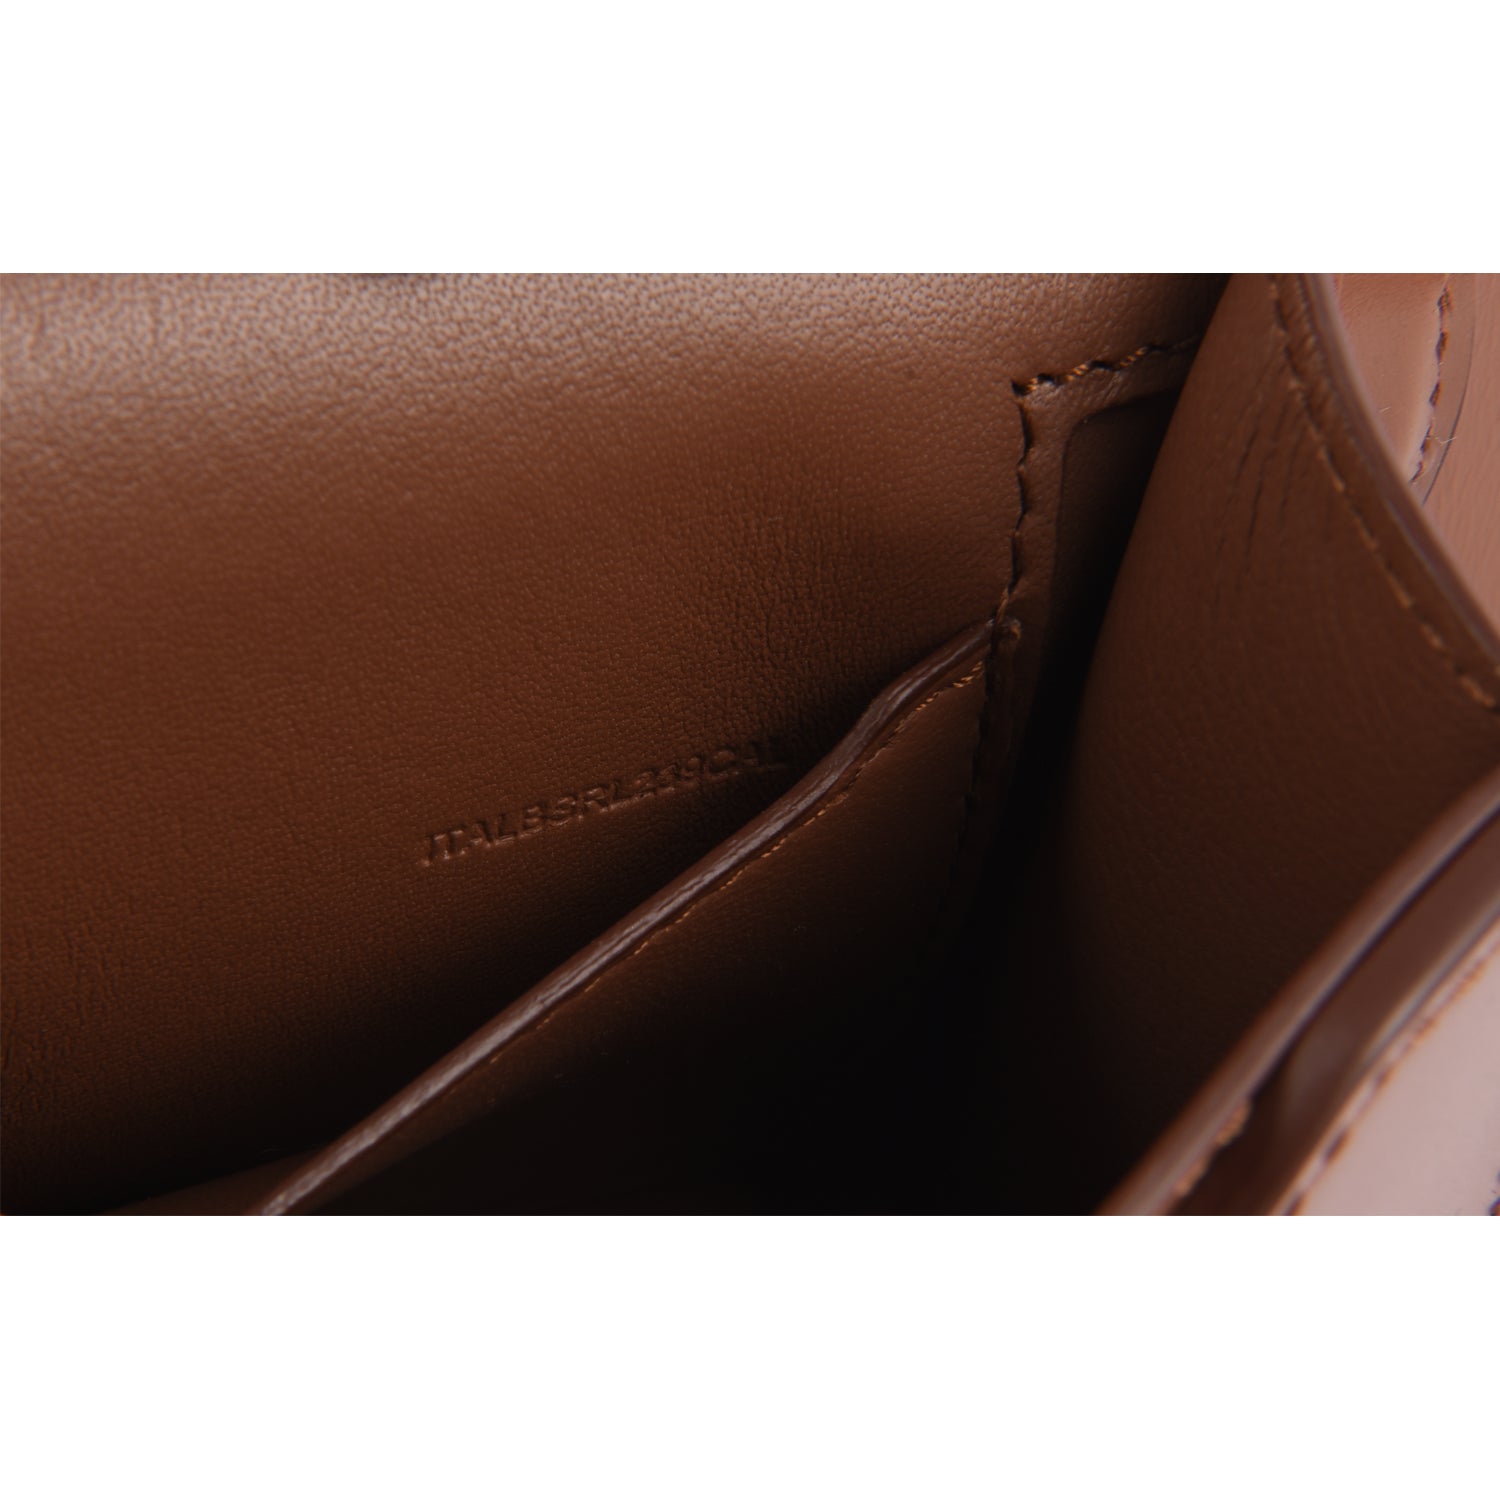 Brown Leather TB Monogram Belt Bag